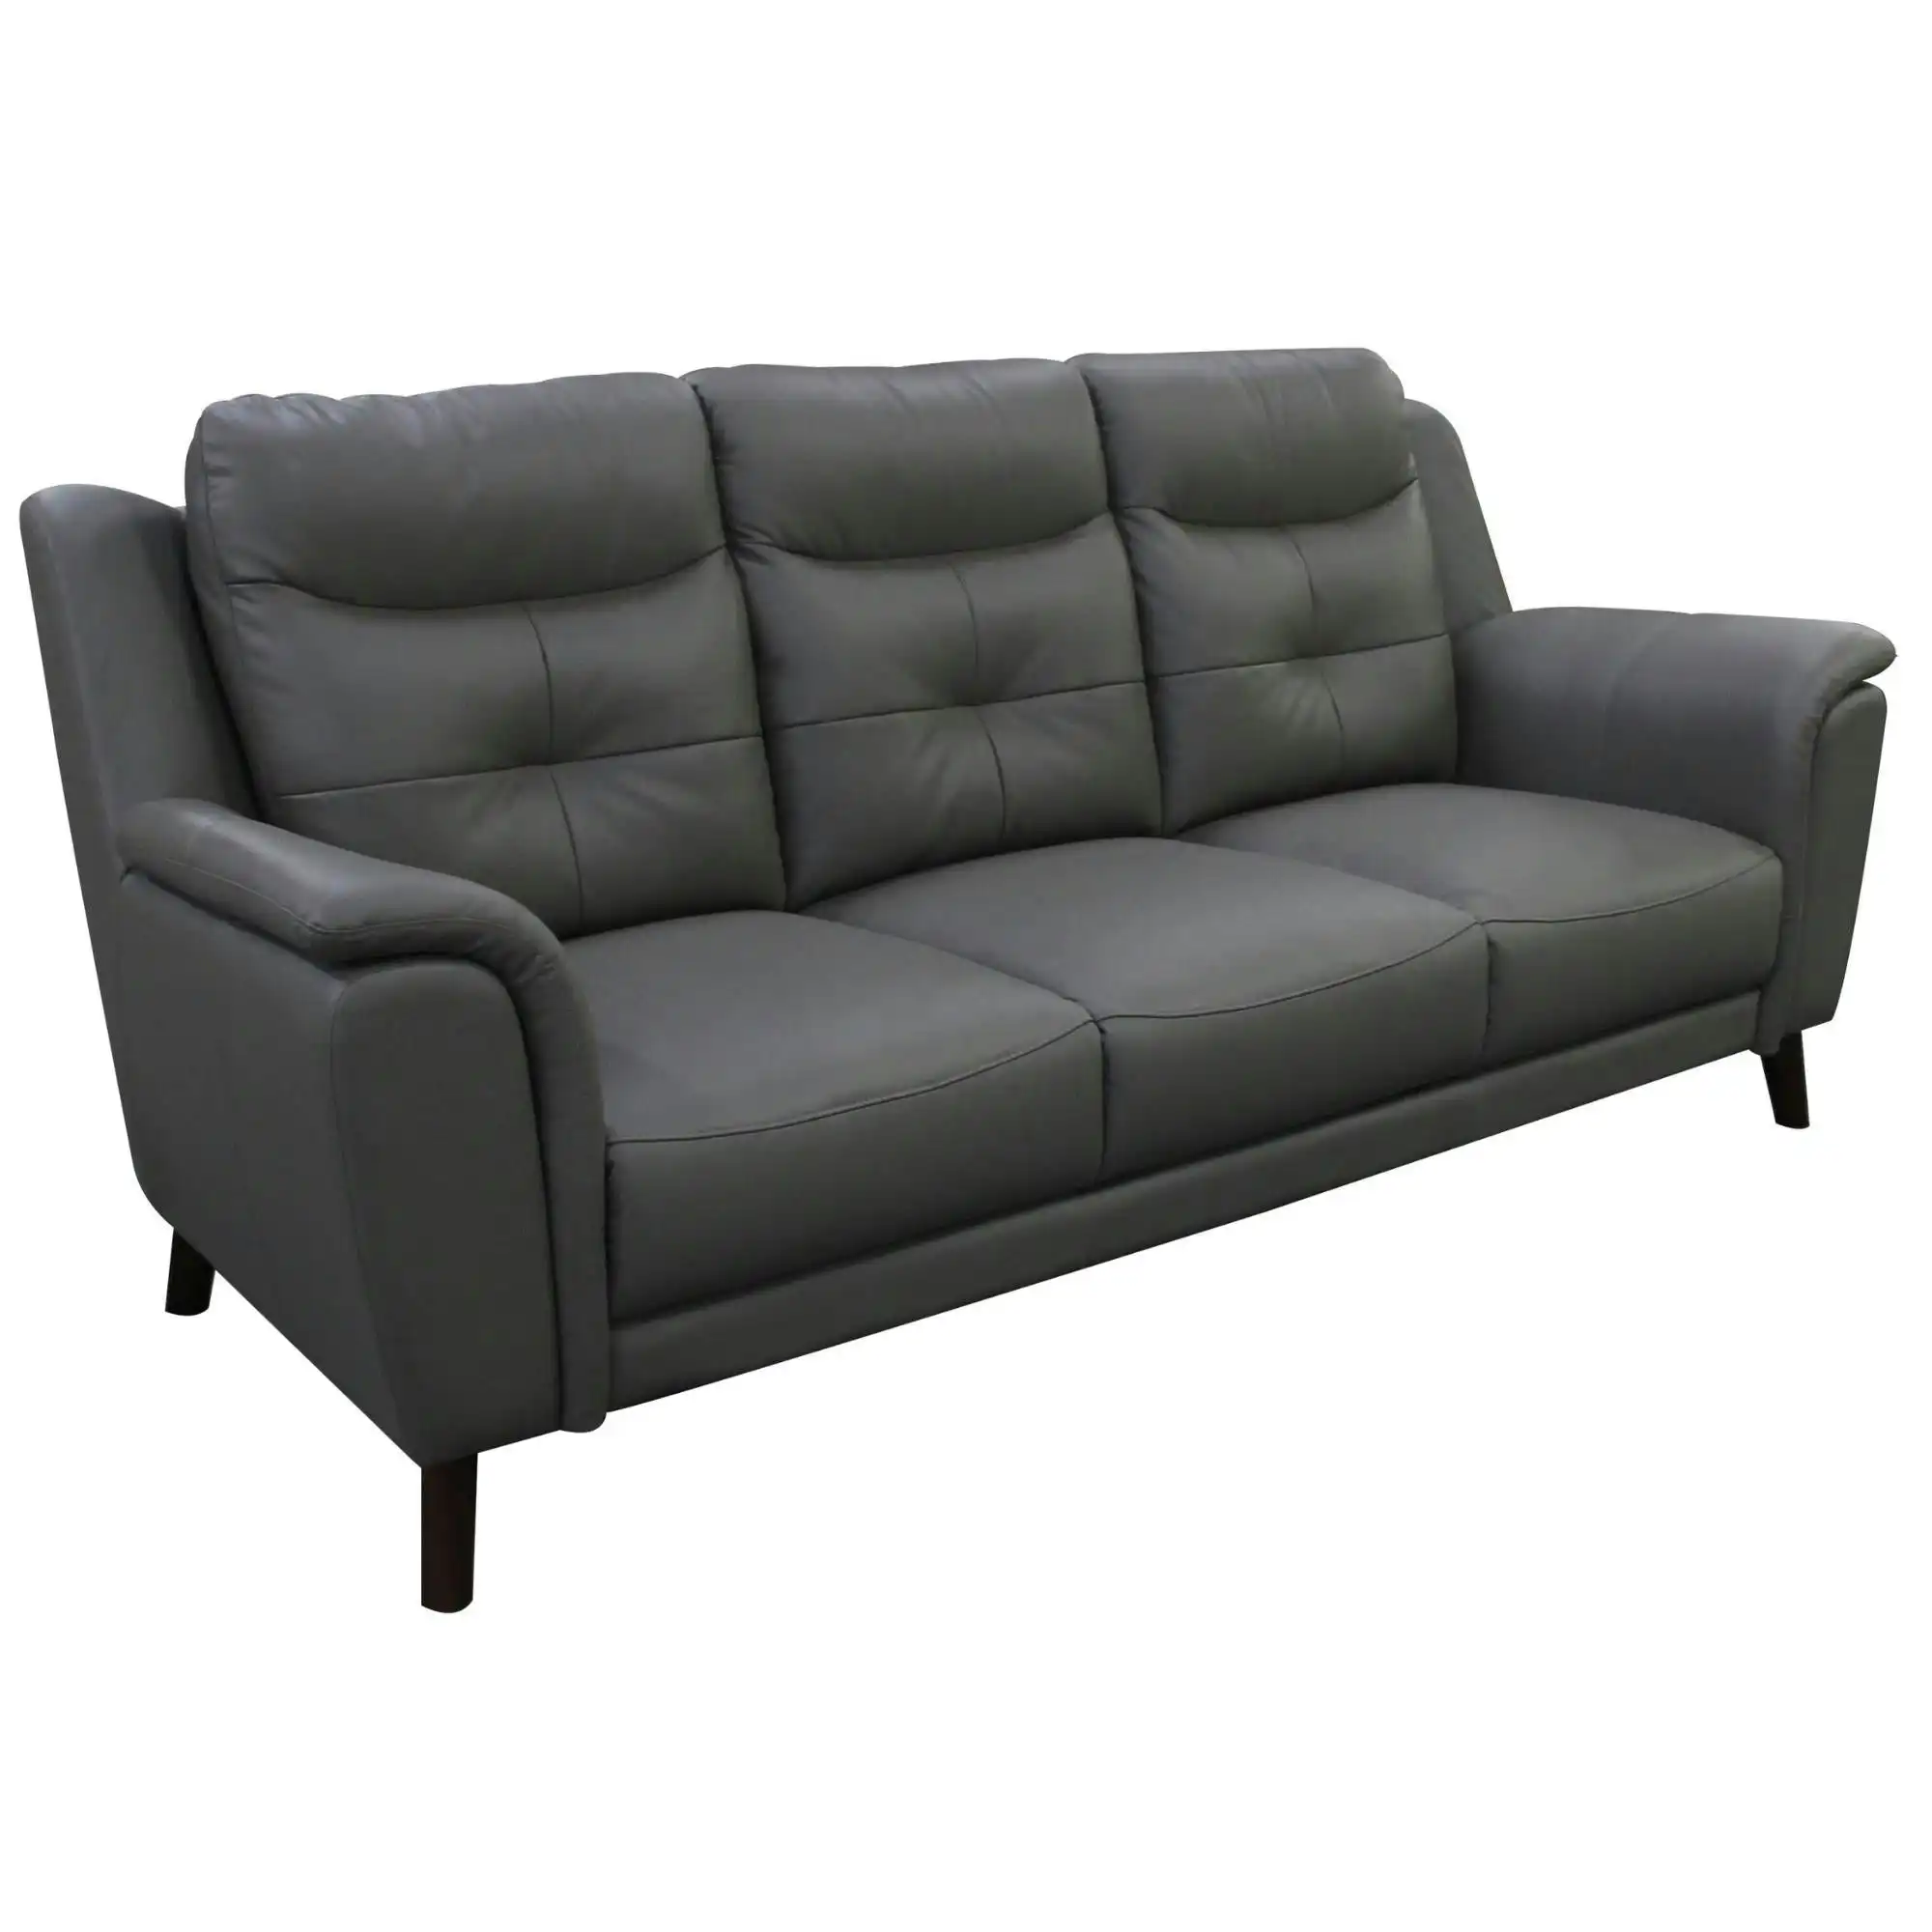 Opal 3 Seater Leather Sofa